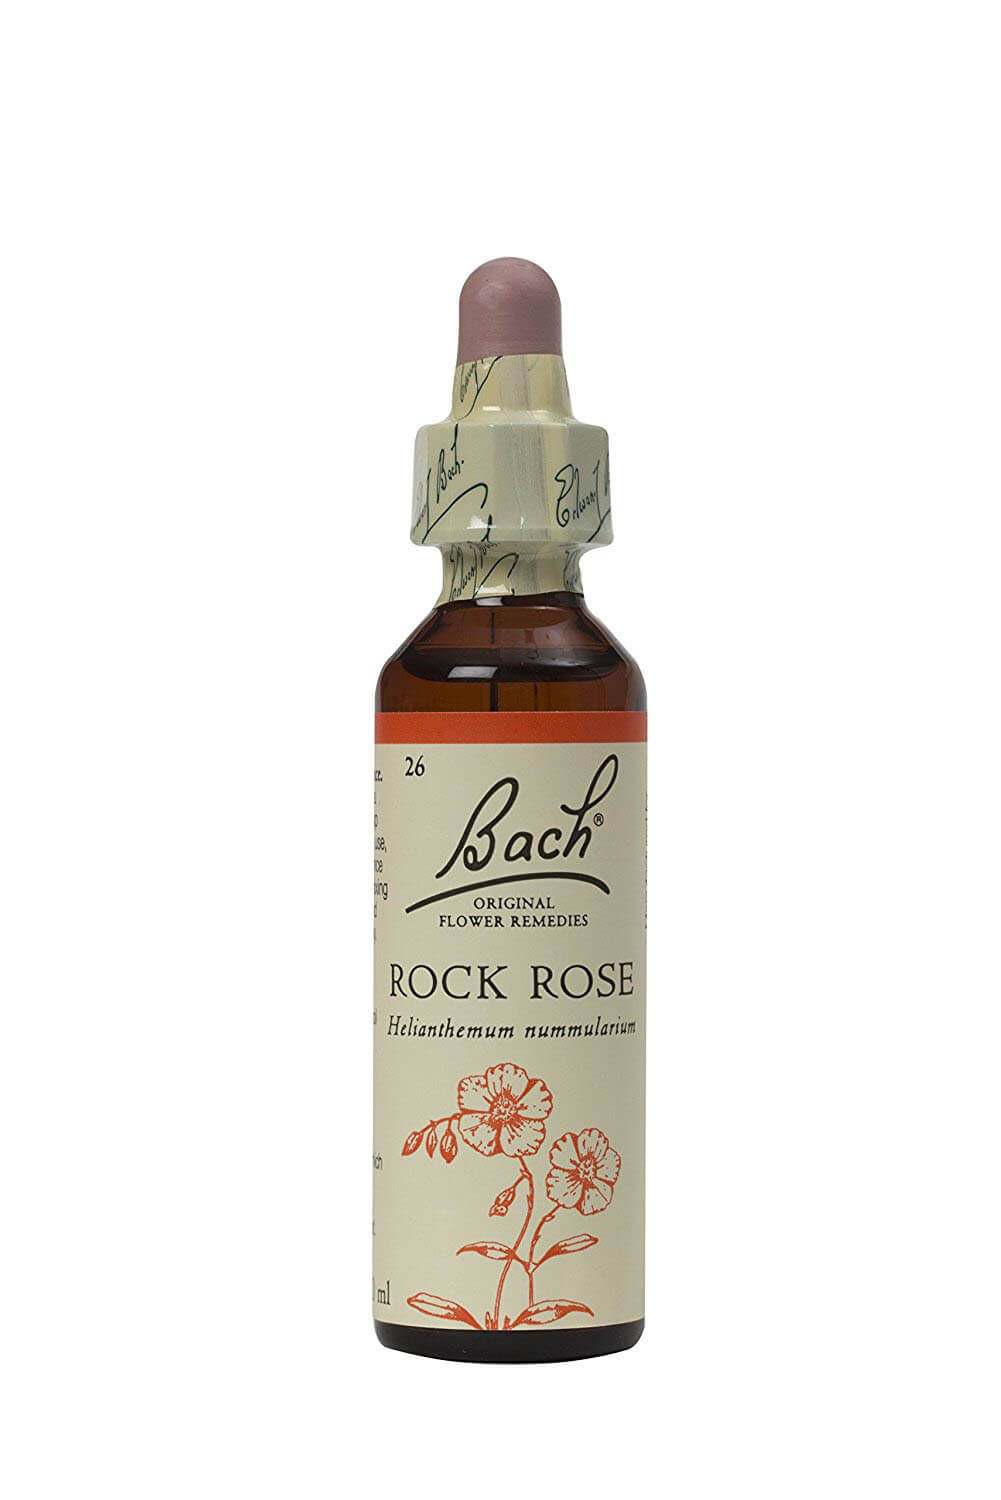 Rock rose